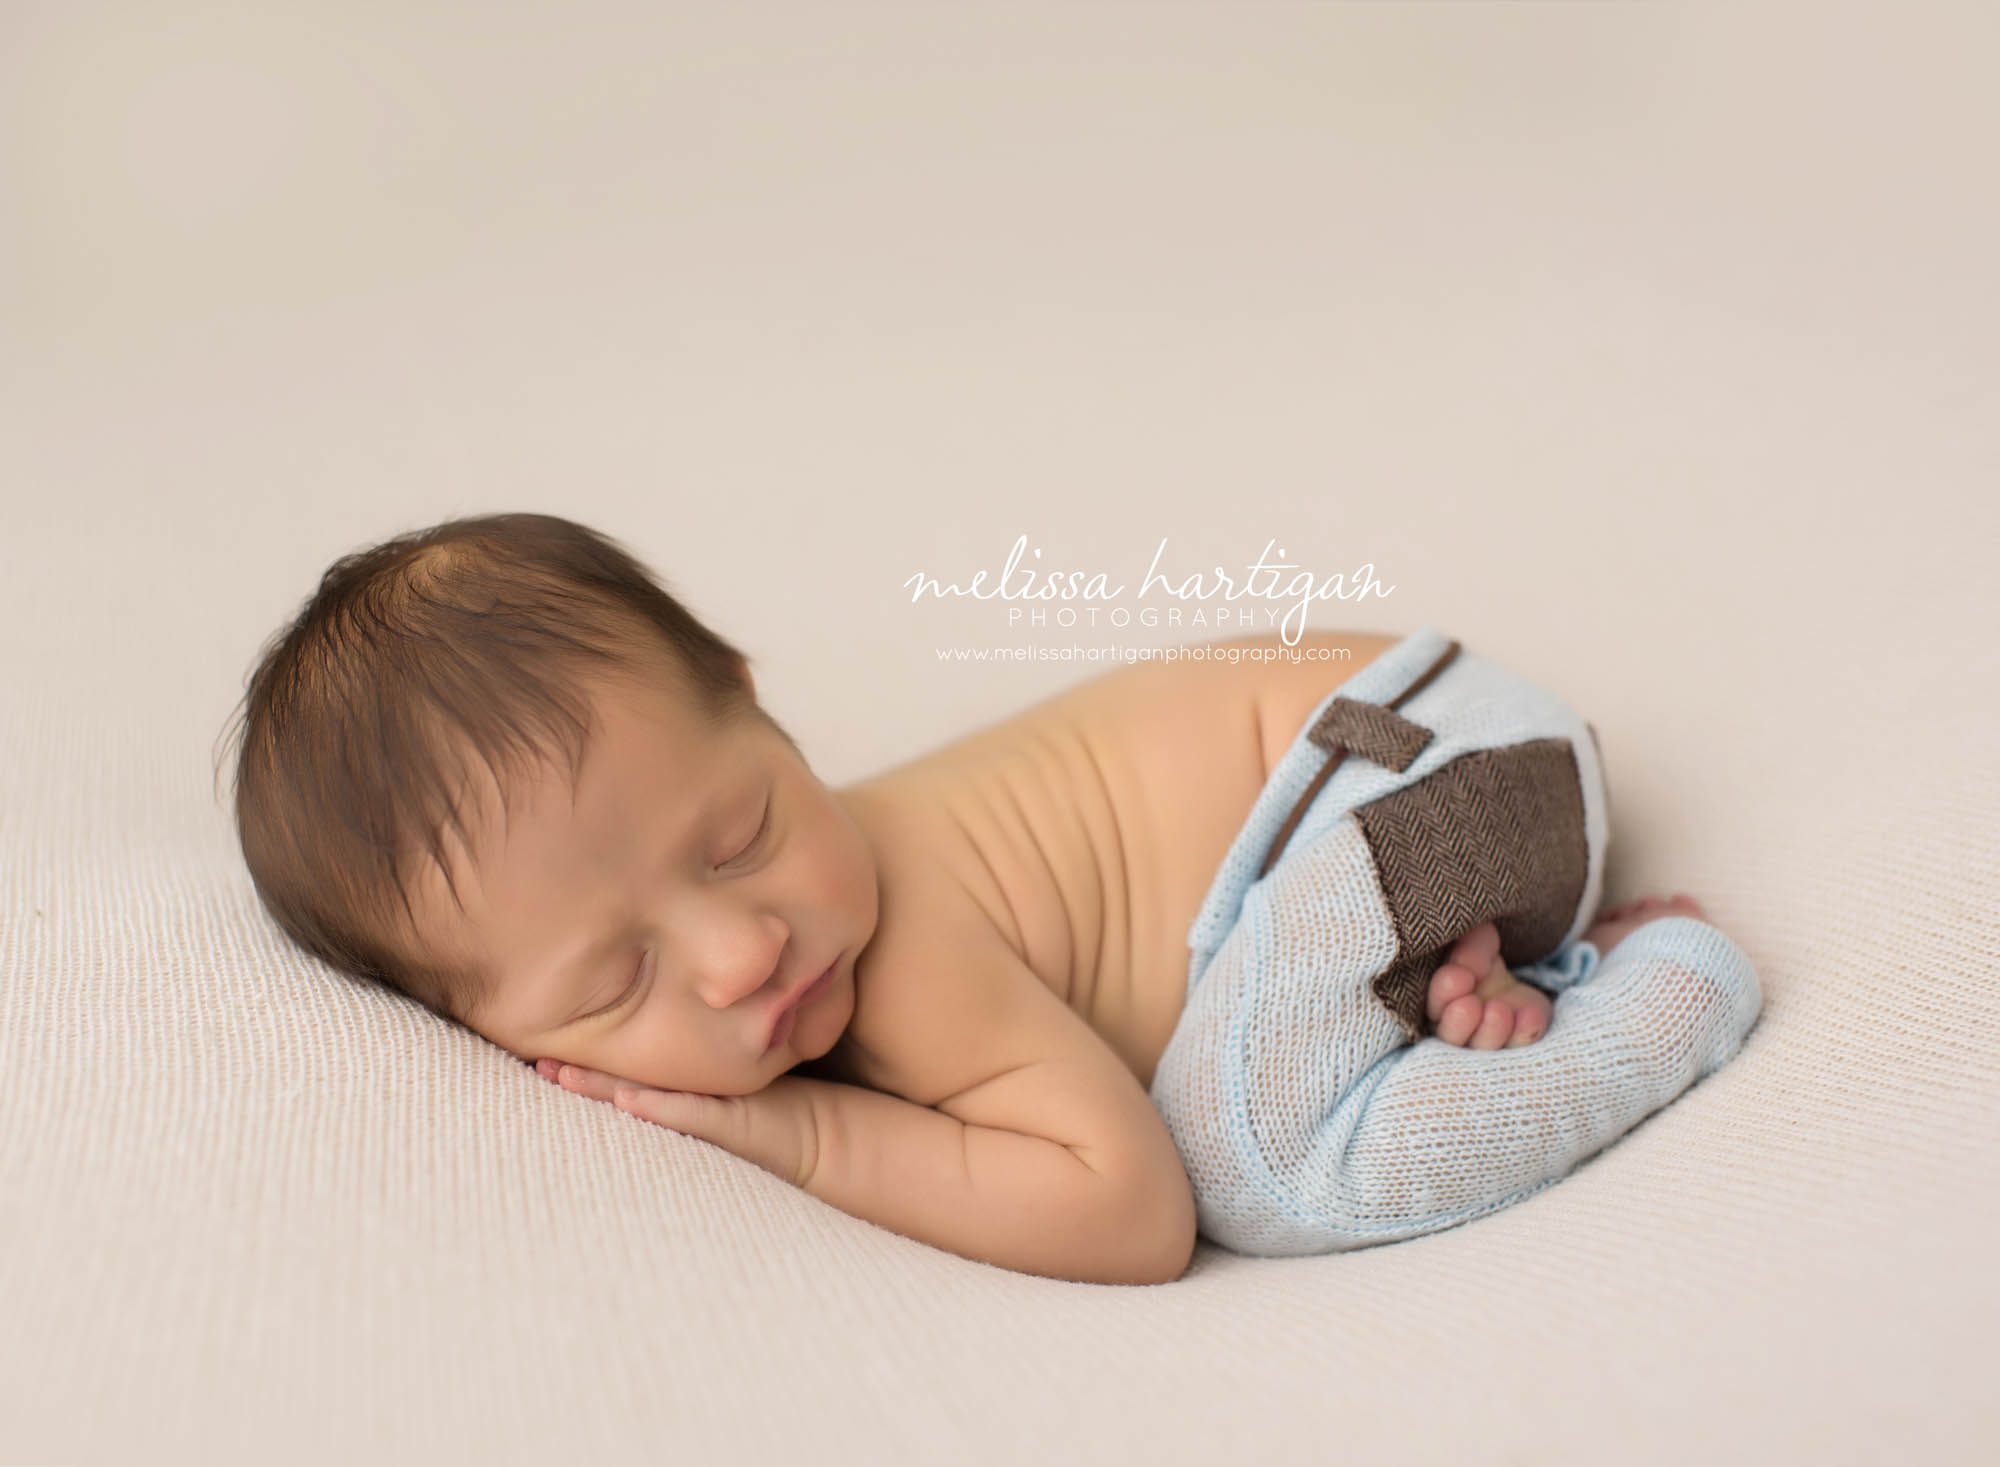 Melissa Hartigan Photography Maternity and Newborn Connecticut Photographer Brayden Mini Newborn Session Baby boy sleeping wearing light blue knit pants with foot tucked under tushy